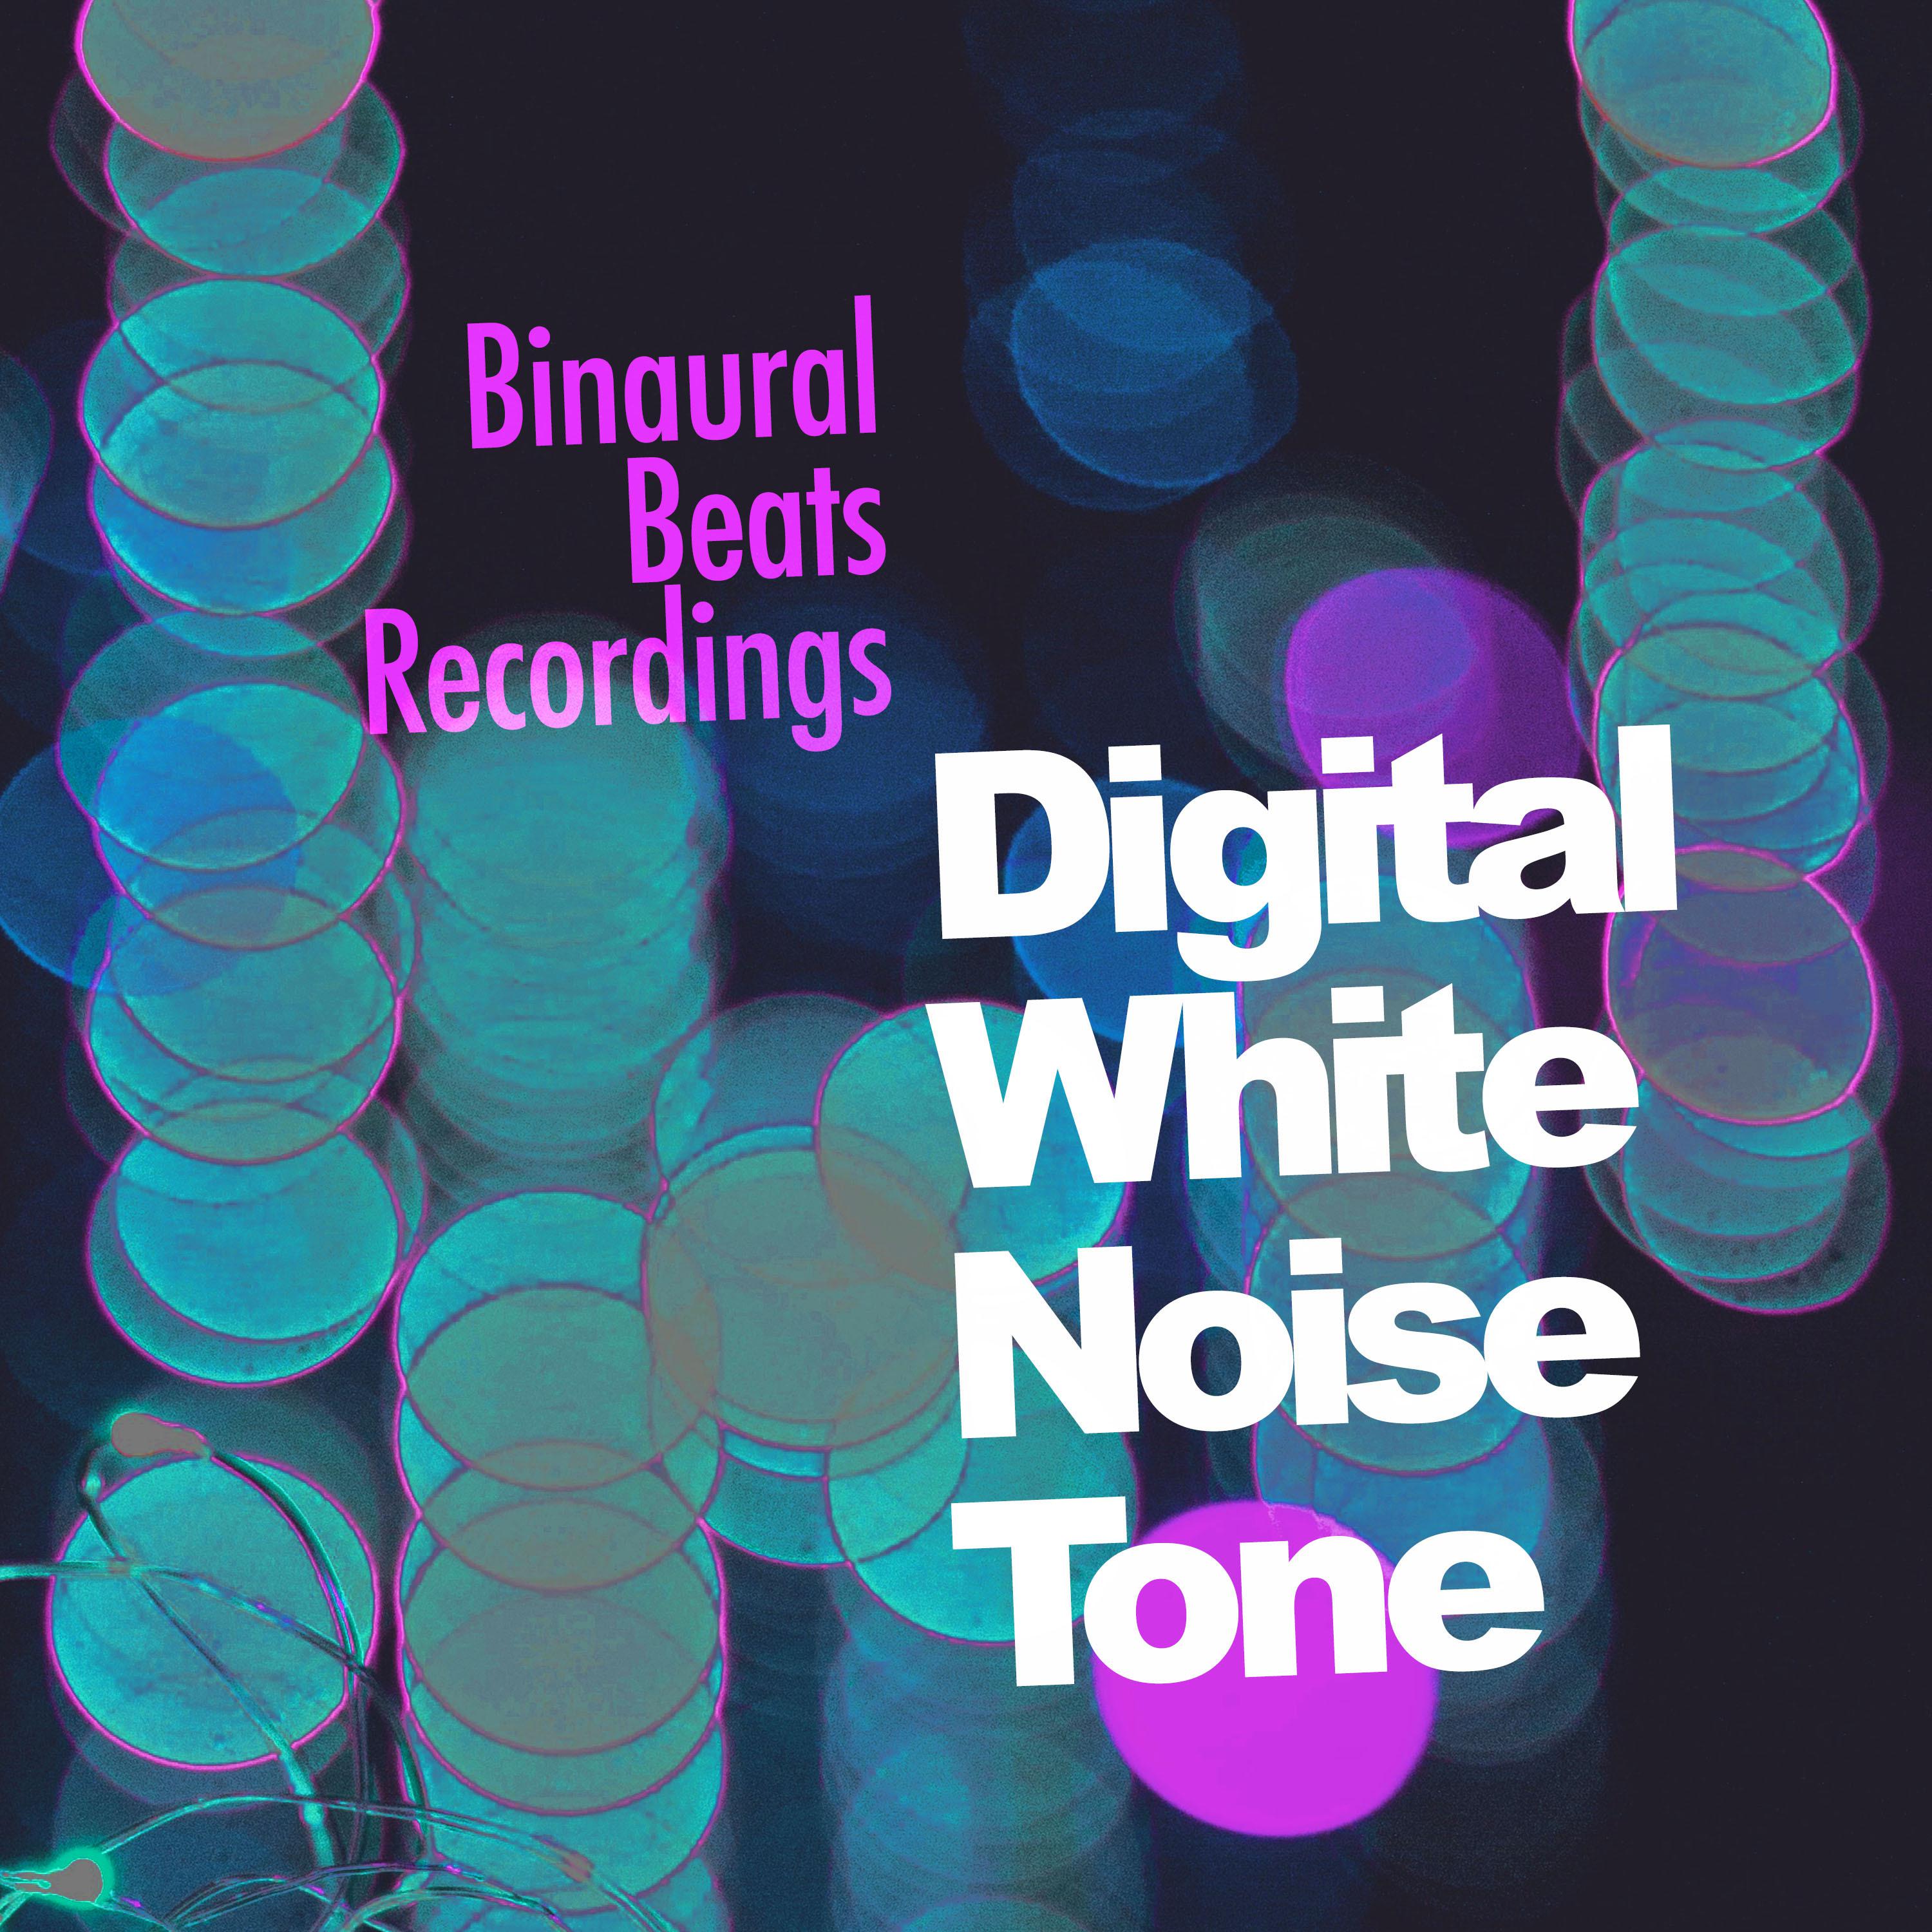 Digital White Noise Tone